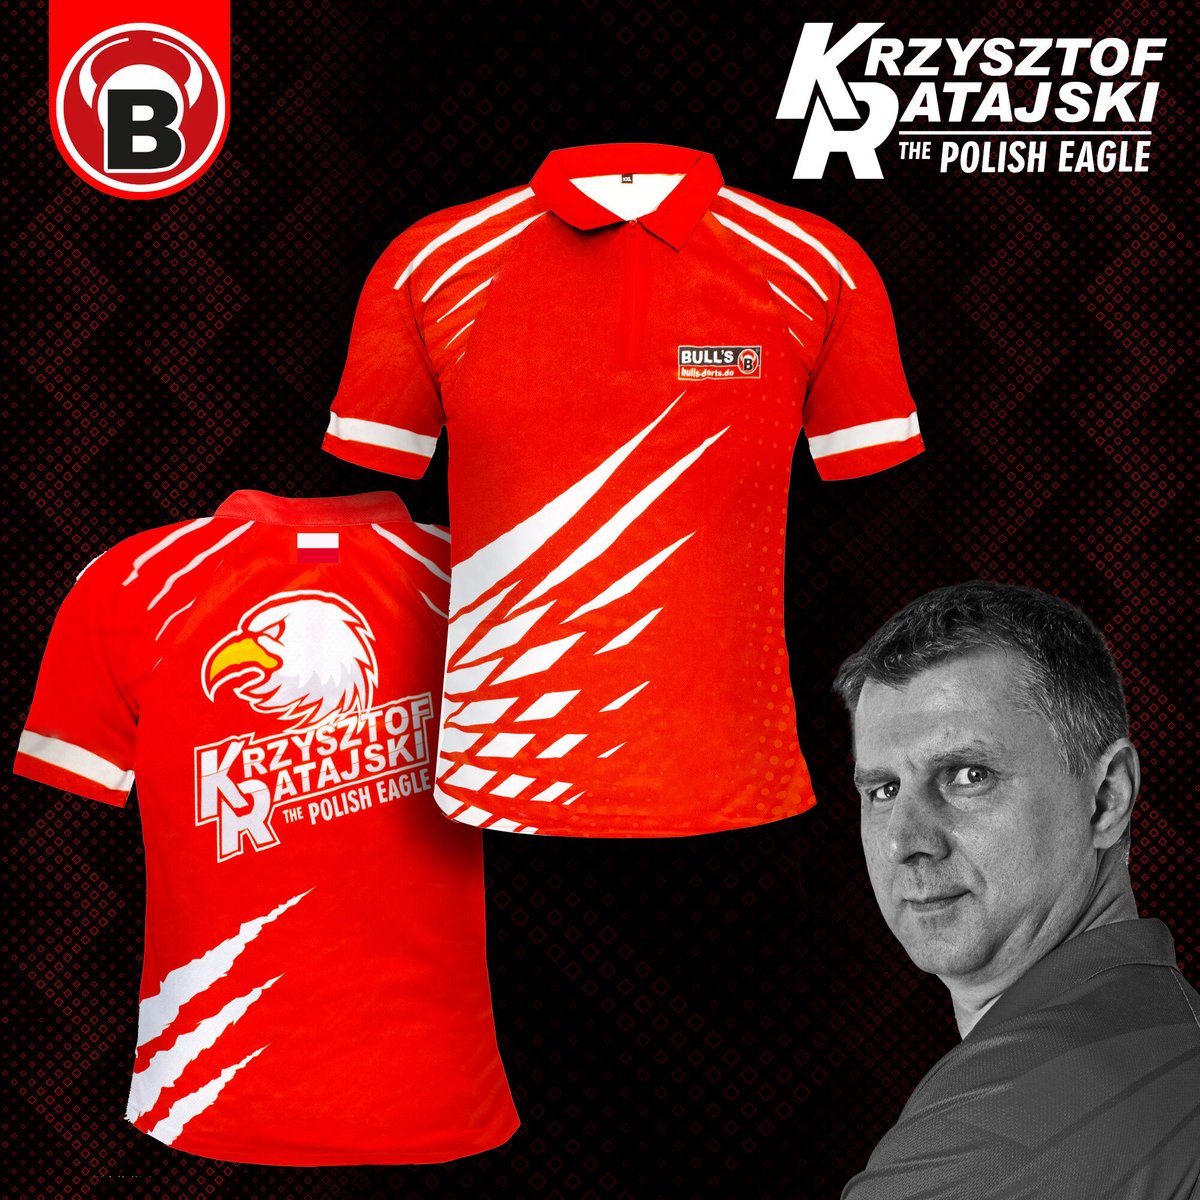 🇵🇱 Spread your wings 🦅

 The brand new darts shirt of Krzysztof Ratajski is out now!

#BullsDarts #Darts #DartShop #DartsNews #Darten #DartsLive #DartsofInstagram #DartSide #BULLSRelease #DartShop #DartsofGermany #BullsTeam #thepolisheagle #dartspoland #Ratajski